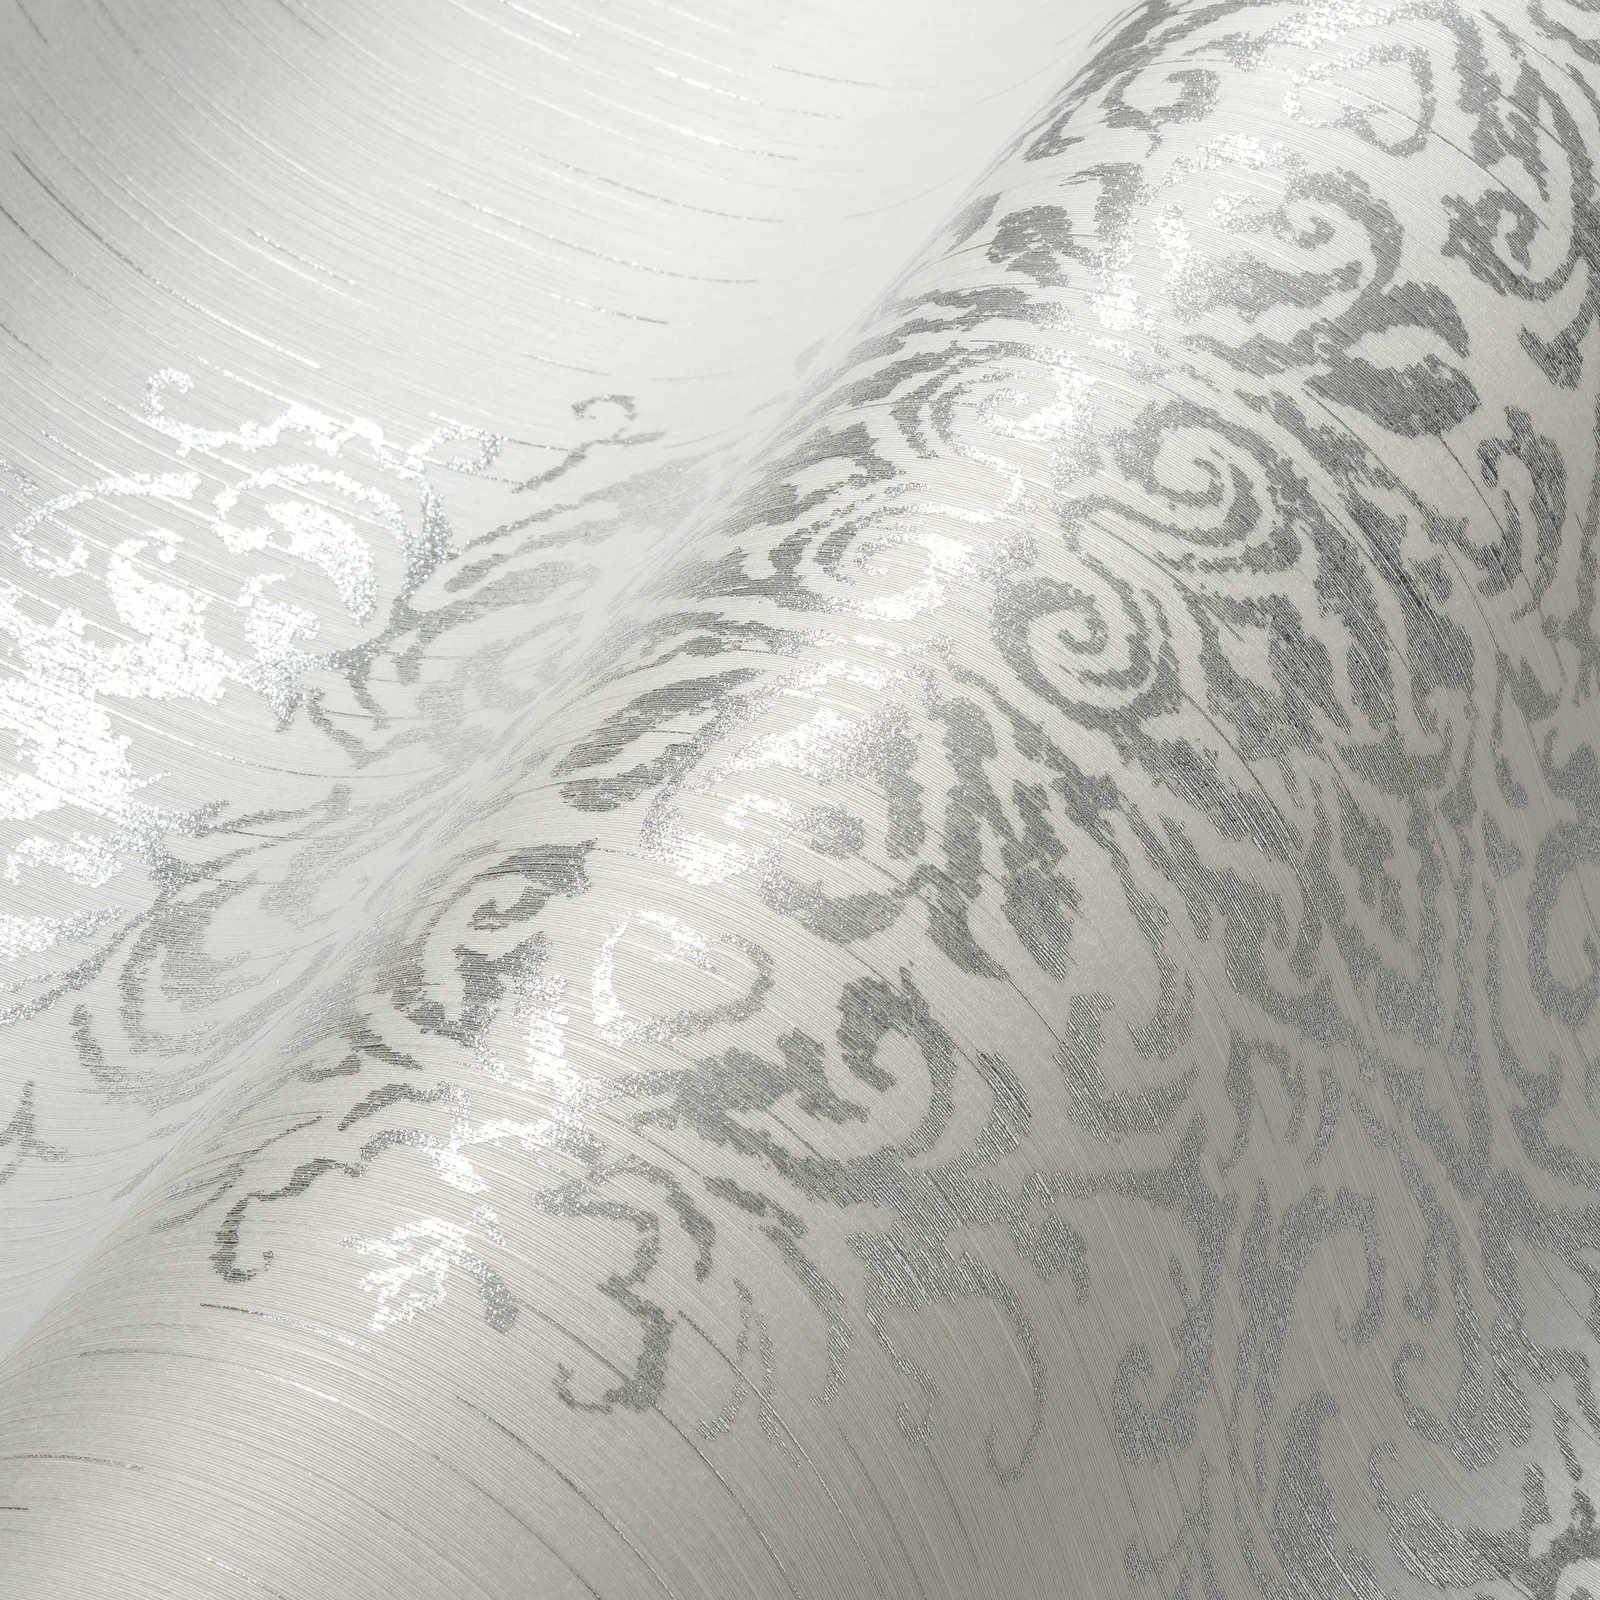             Ornament-Tapete mit Metallic-Effekt im Used-Look – Weiß, Silber, Blau
        